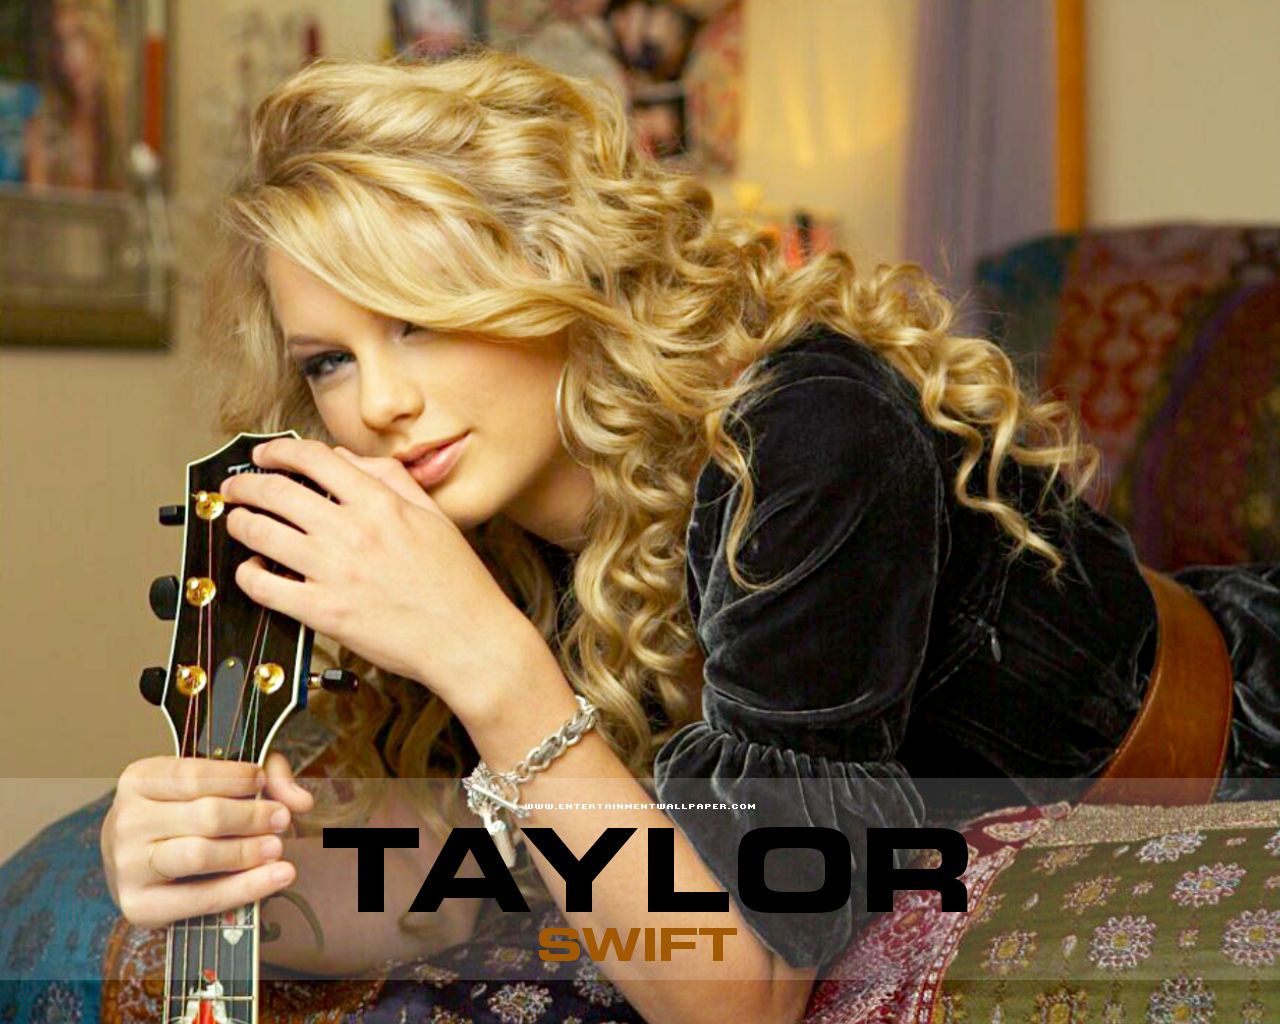 Taylor Swift Tay